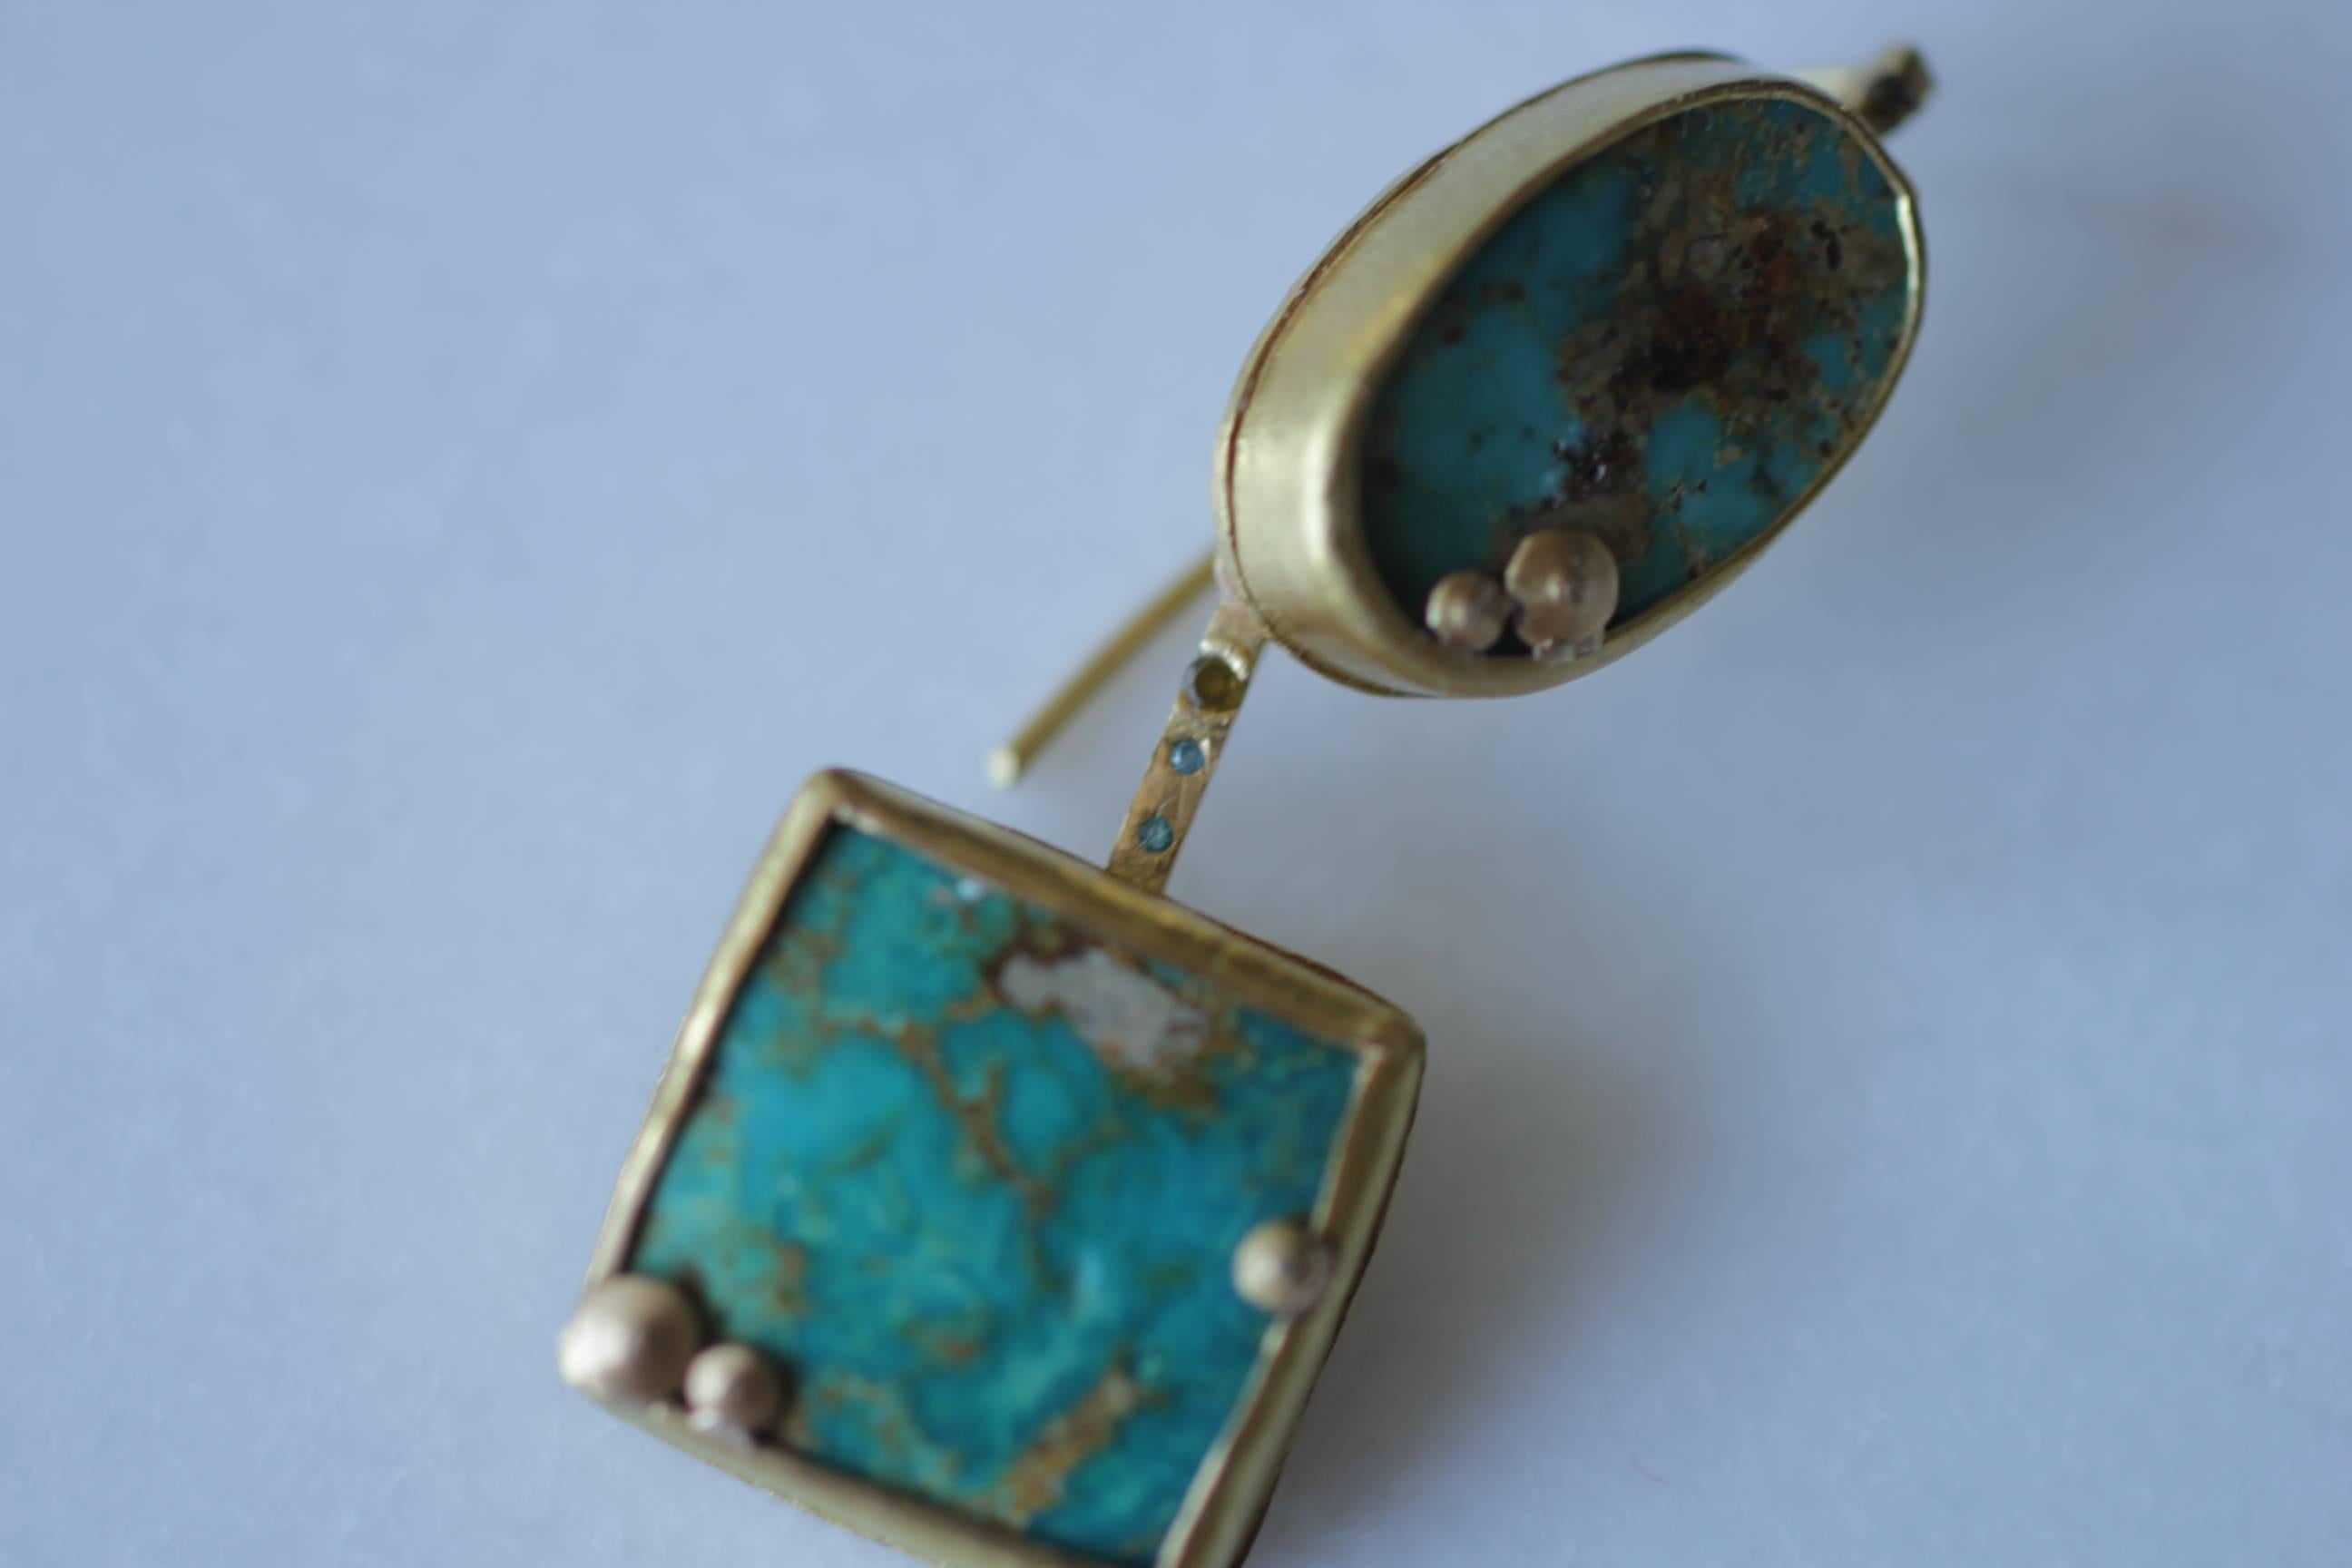 22Karat-21Karat Gold Persian Turquoise and Diamond Earrings Handmade Jewelry 1